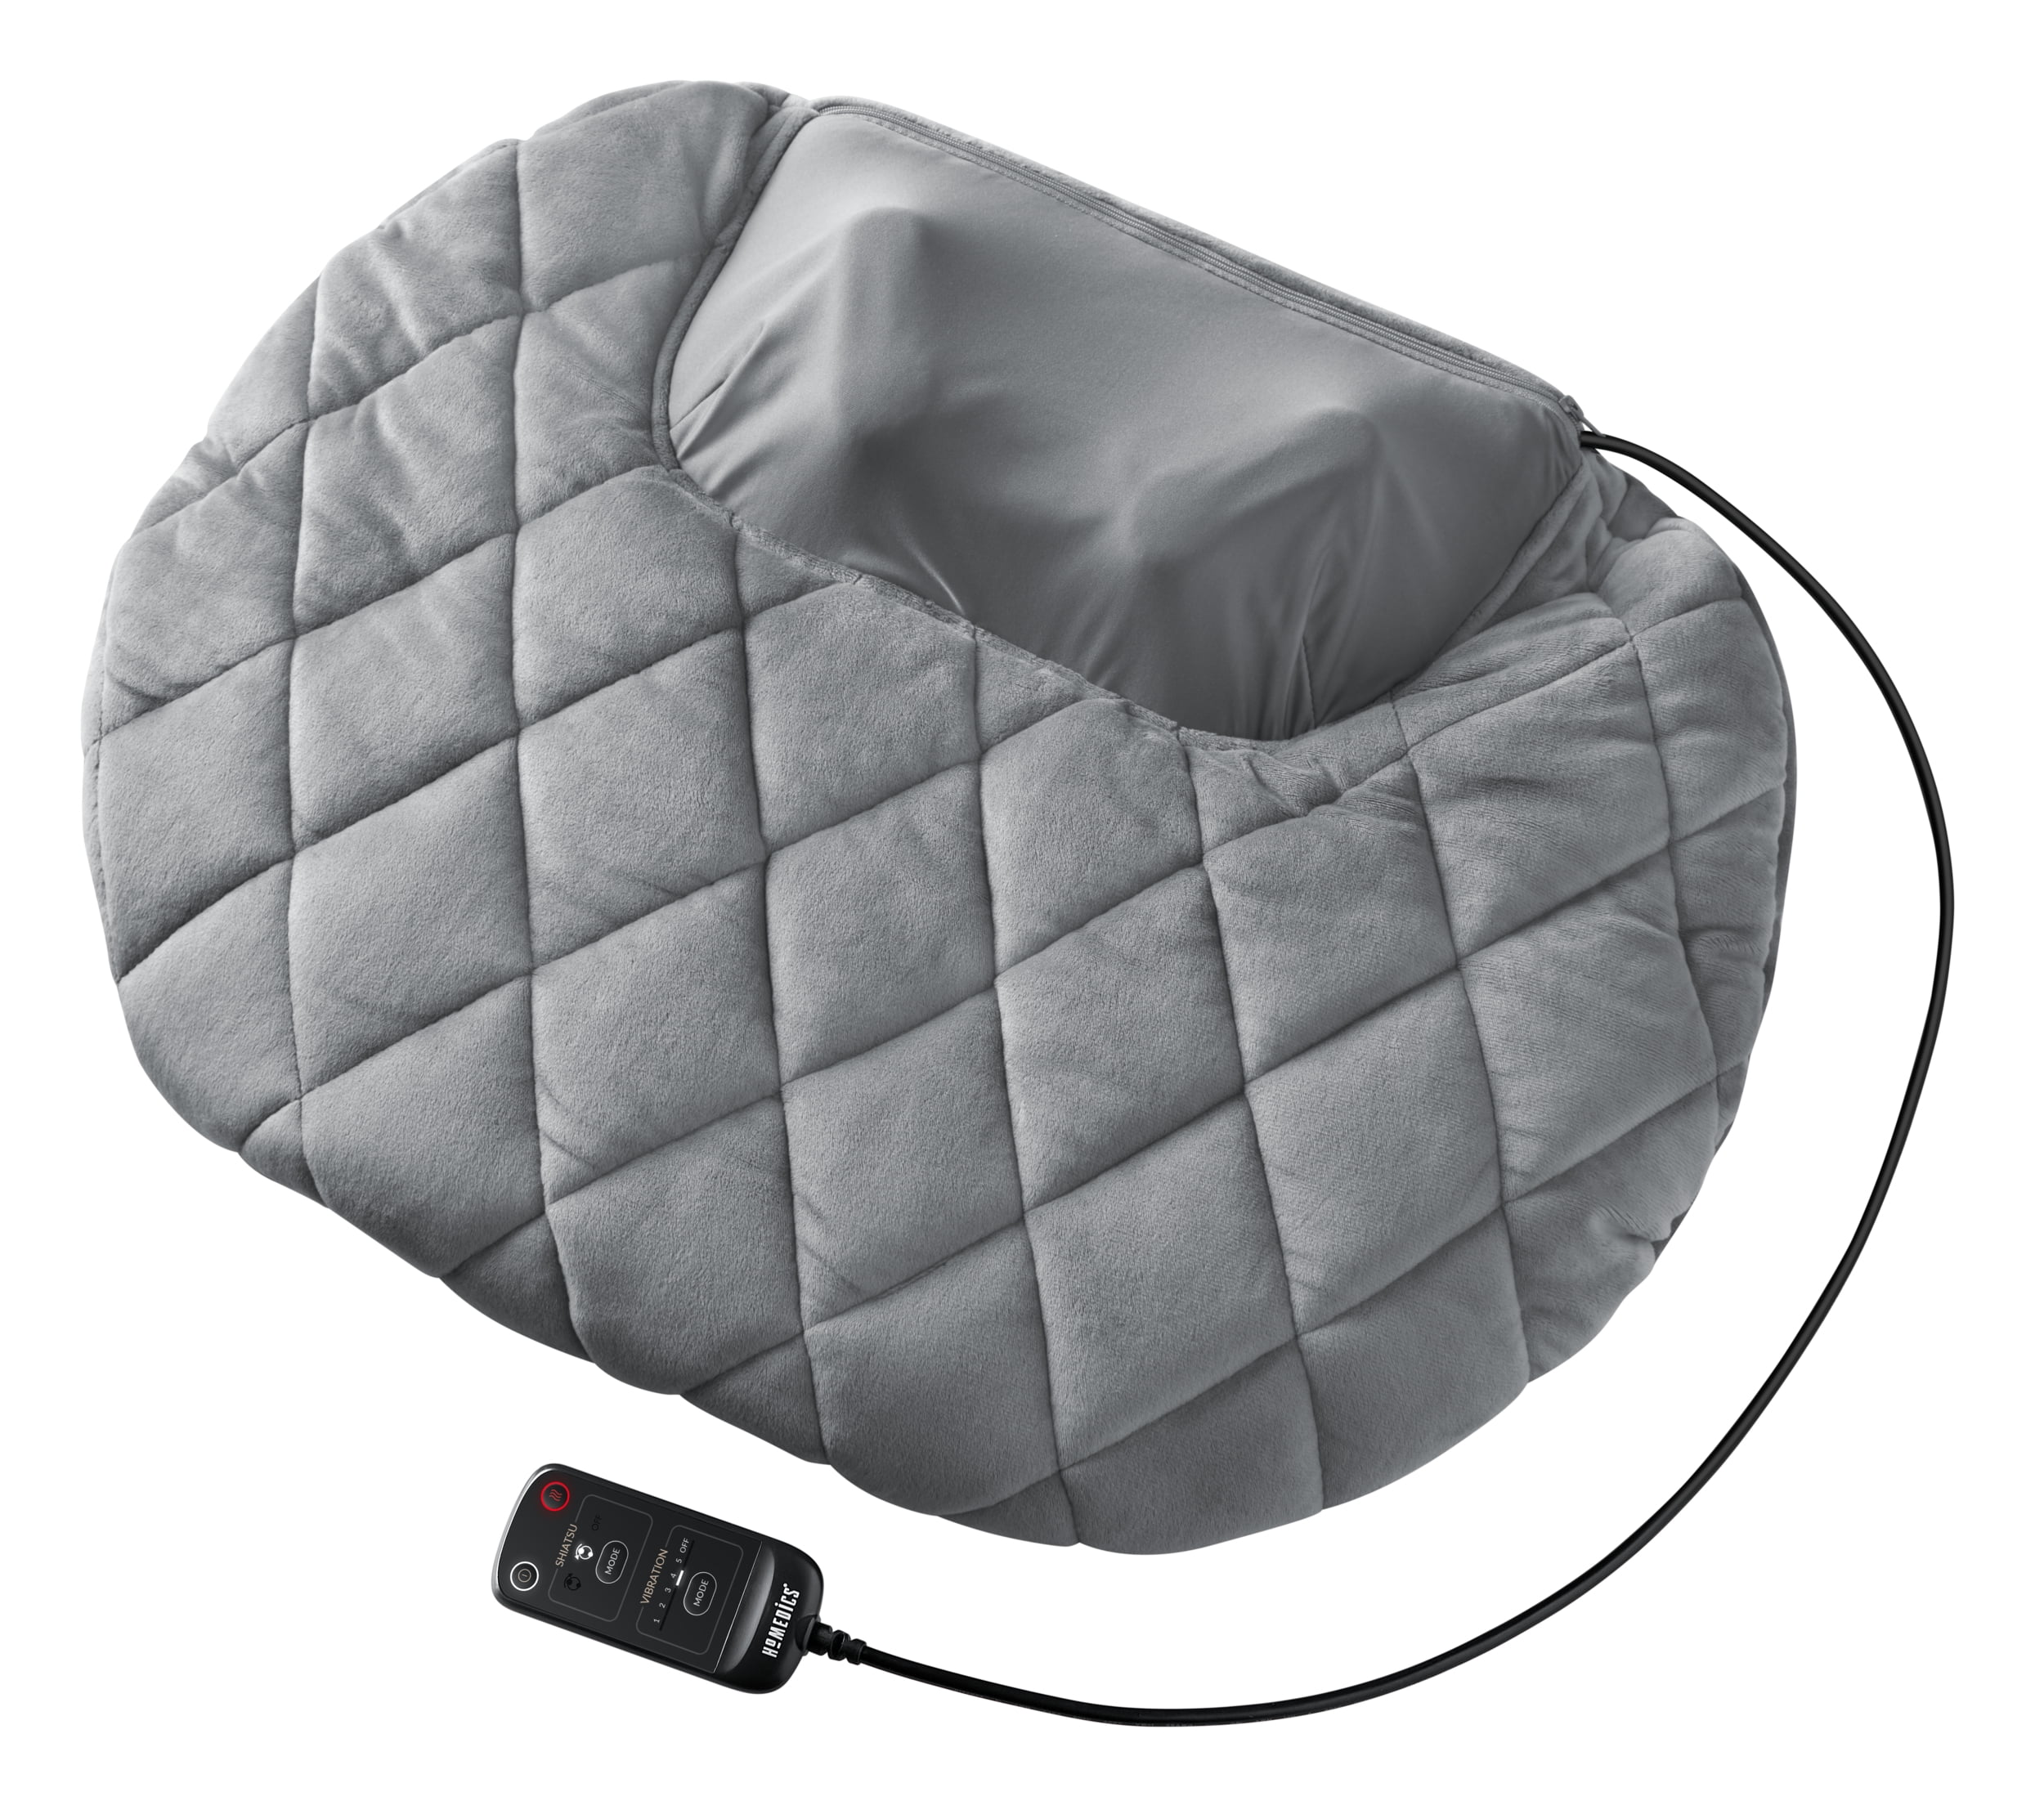 Homedics Shiatsu And Vibration Body Massager Portable Cushion With 5 Settings Soothing Heat